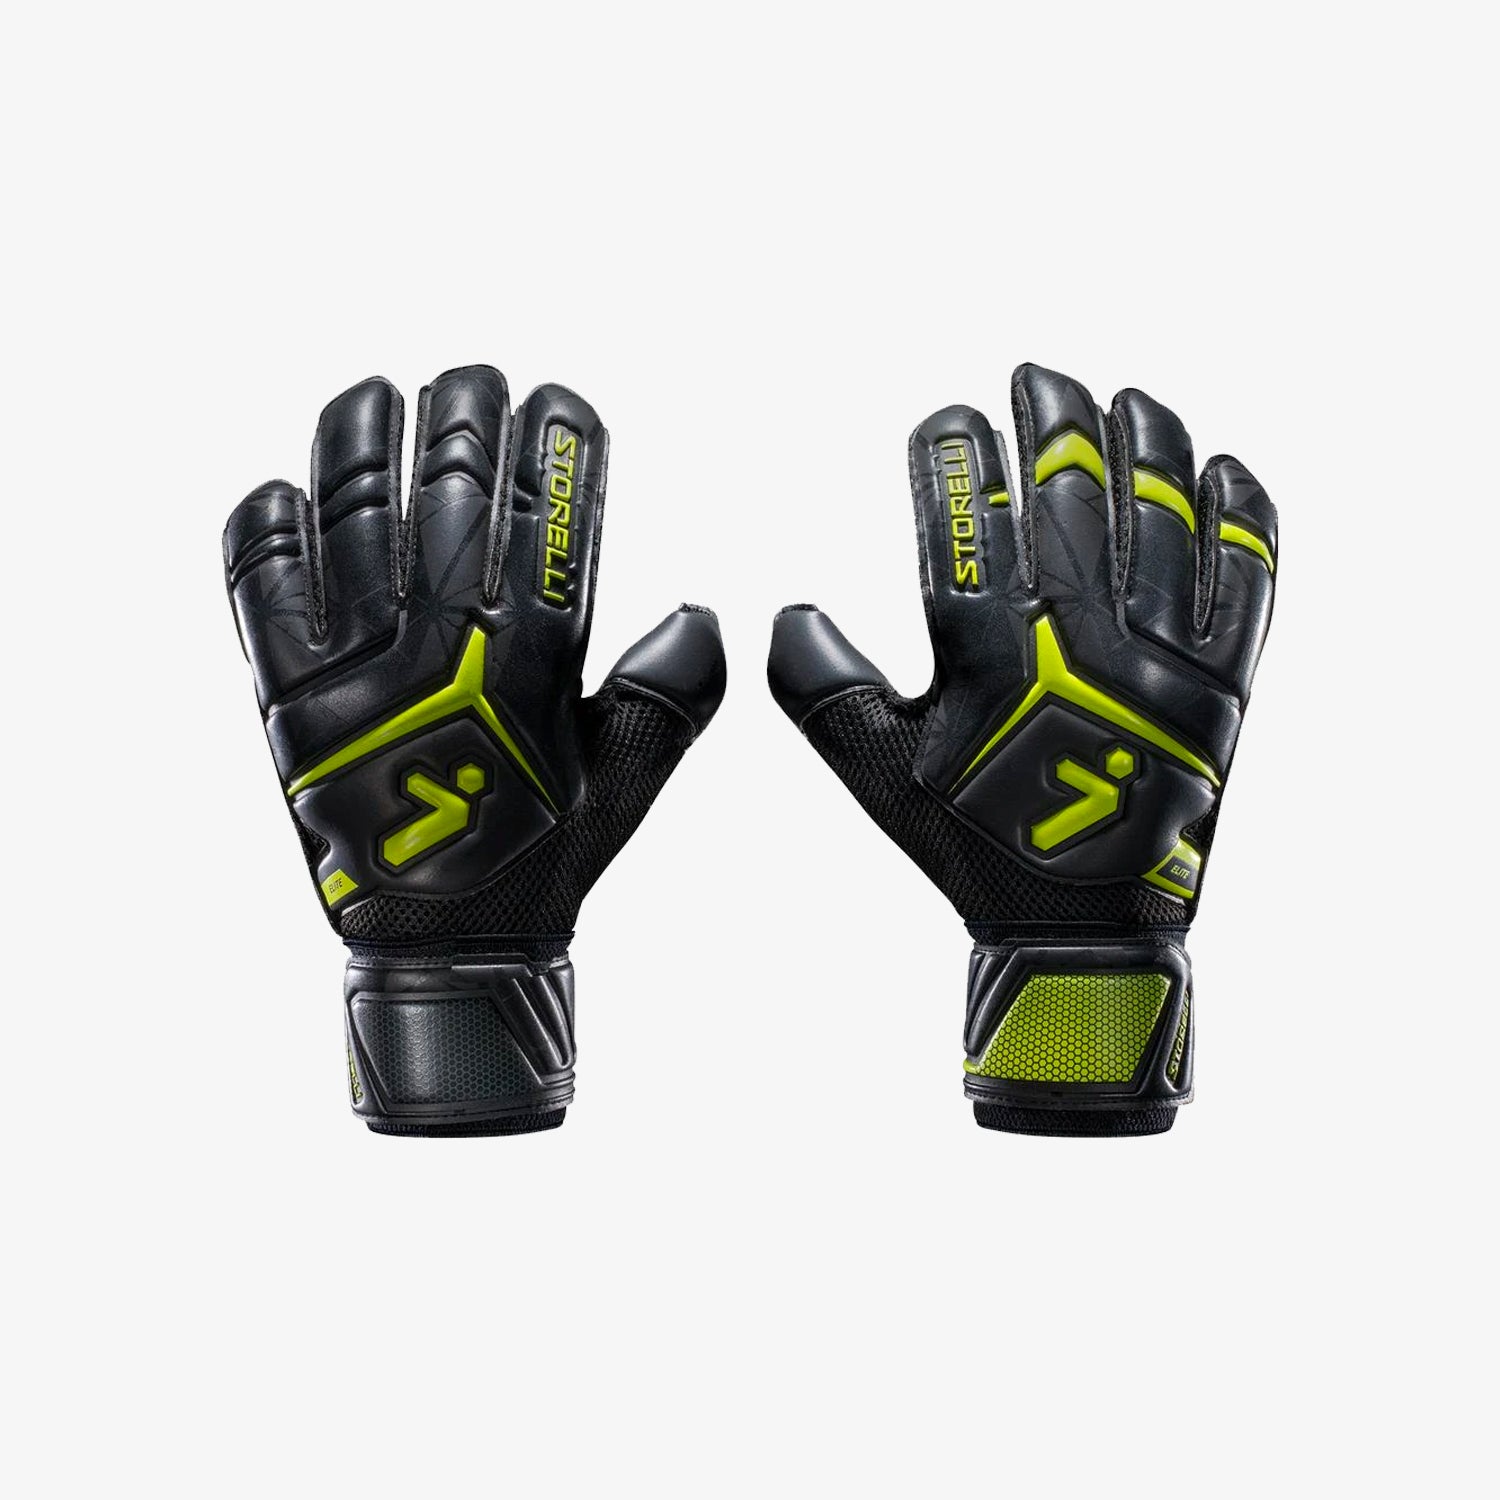 Gladiator 2.0 Pro Finger Spine Goalkeeper Gloves - Black